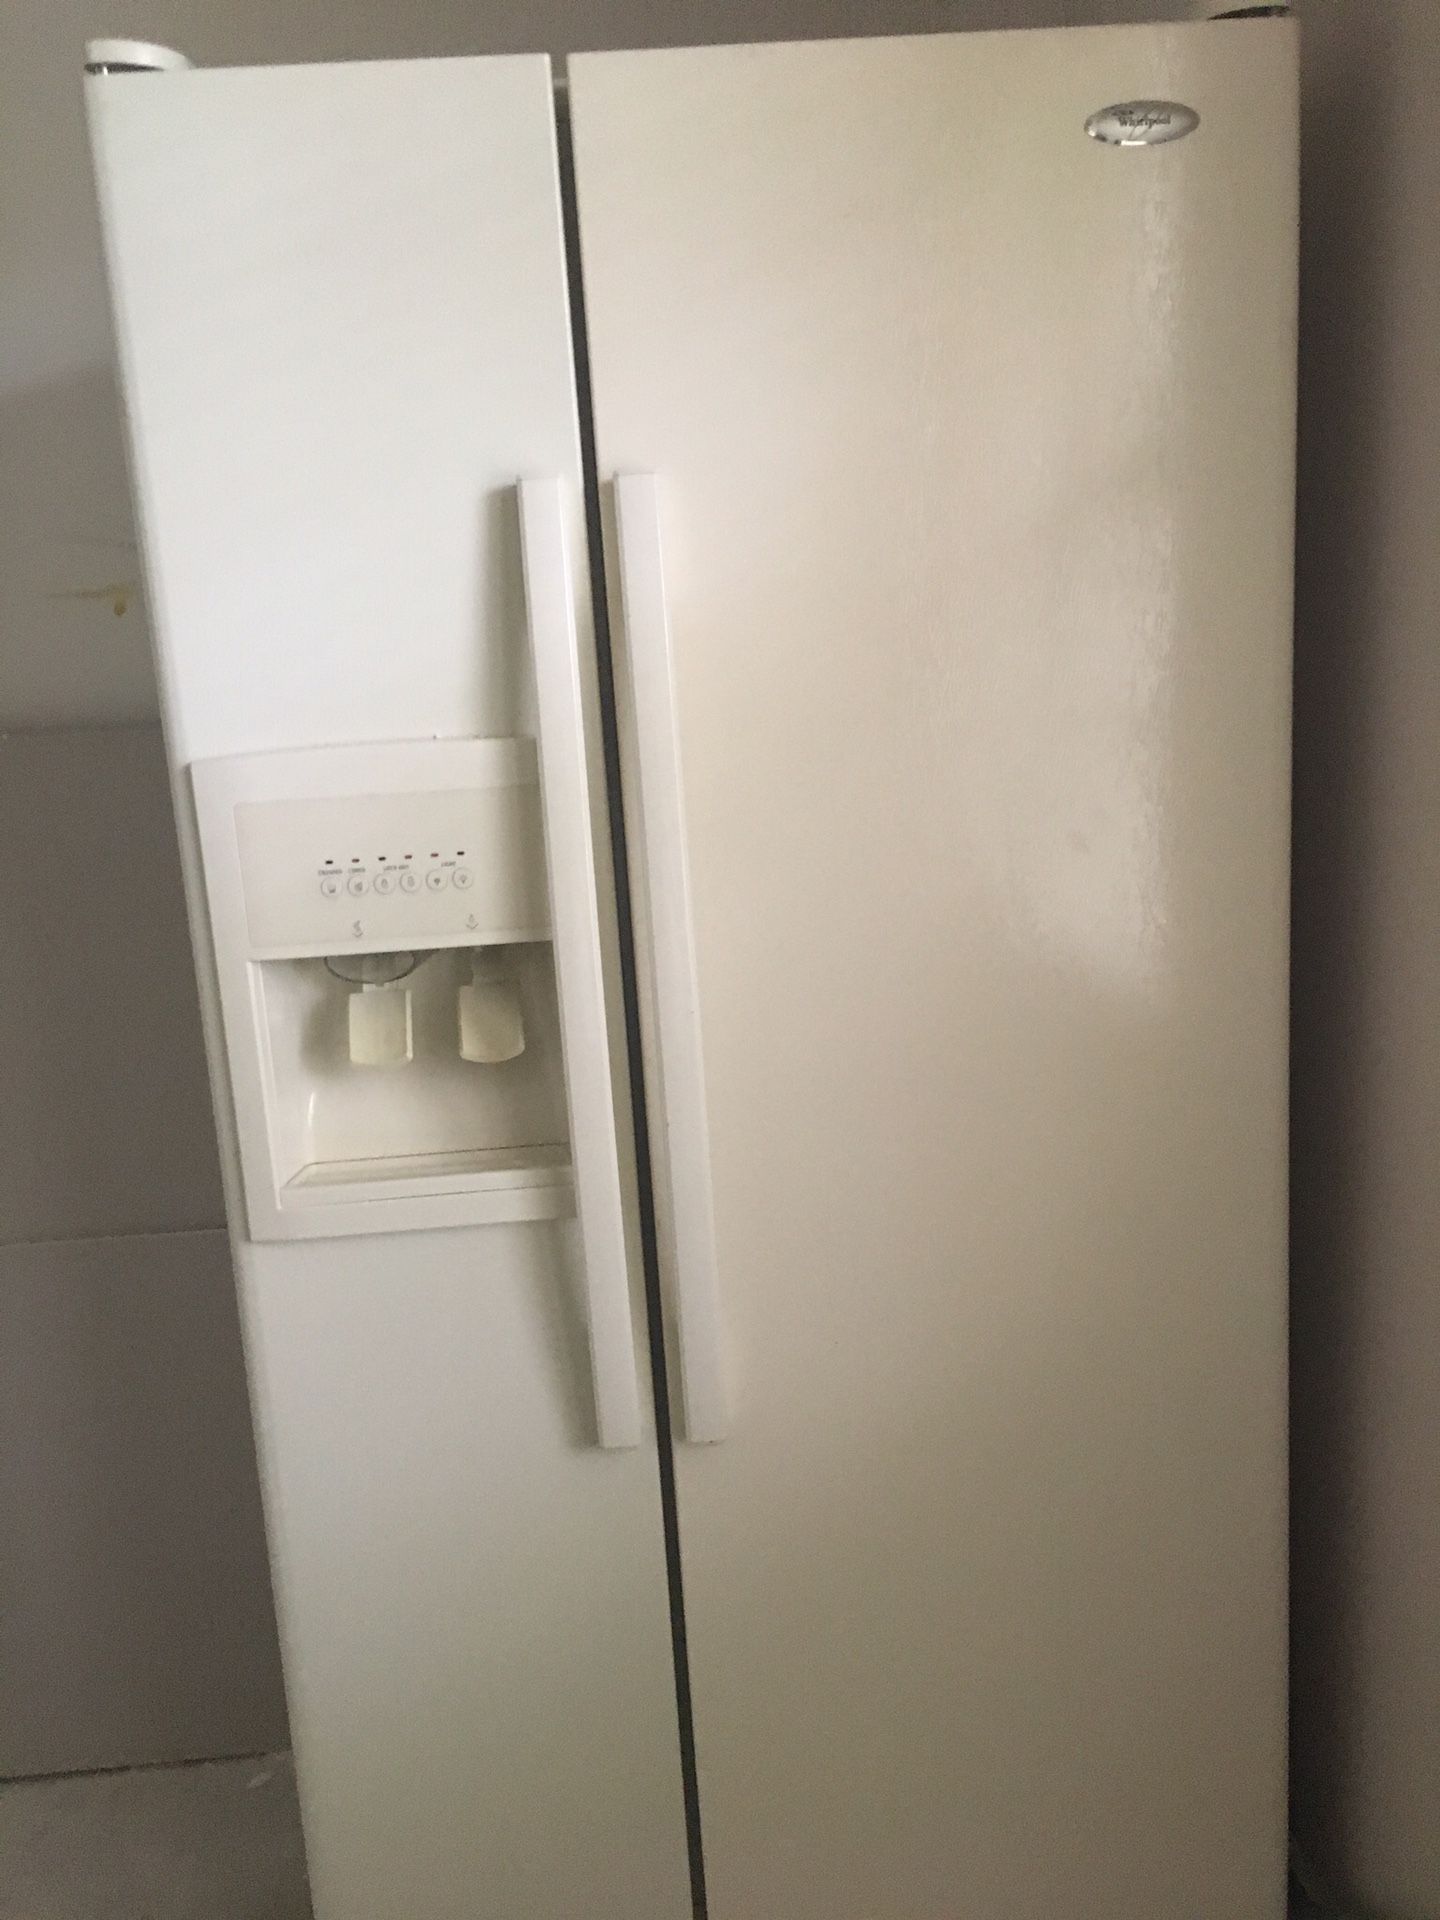 Whirlpool refrigerator 22 cu ft